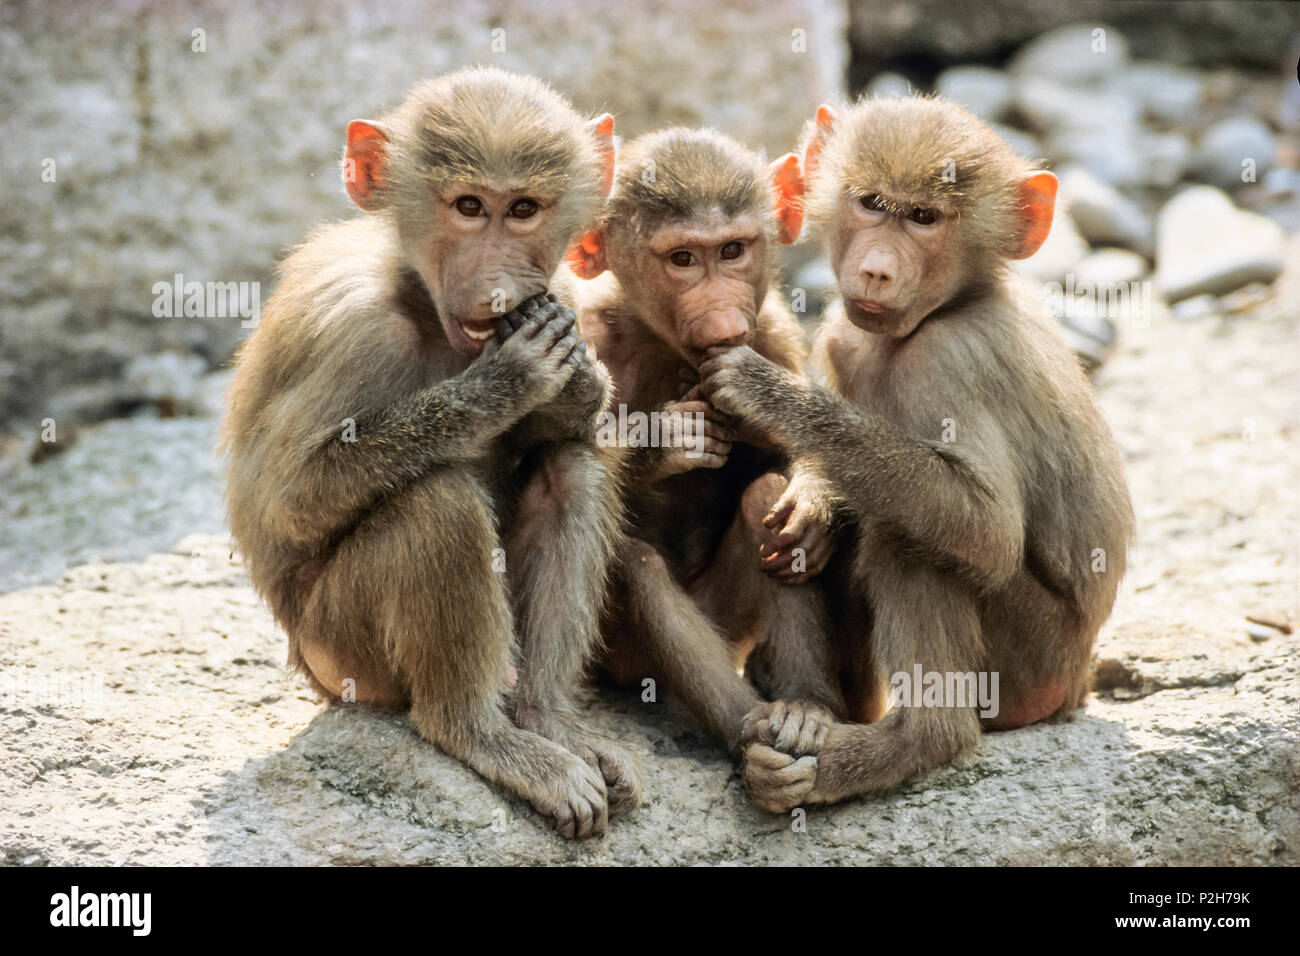 Three young Baboons, Papio hamadryas, Africa, captive Stock Photo